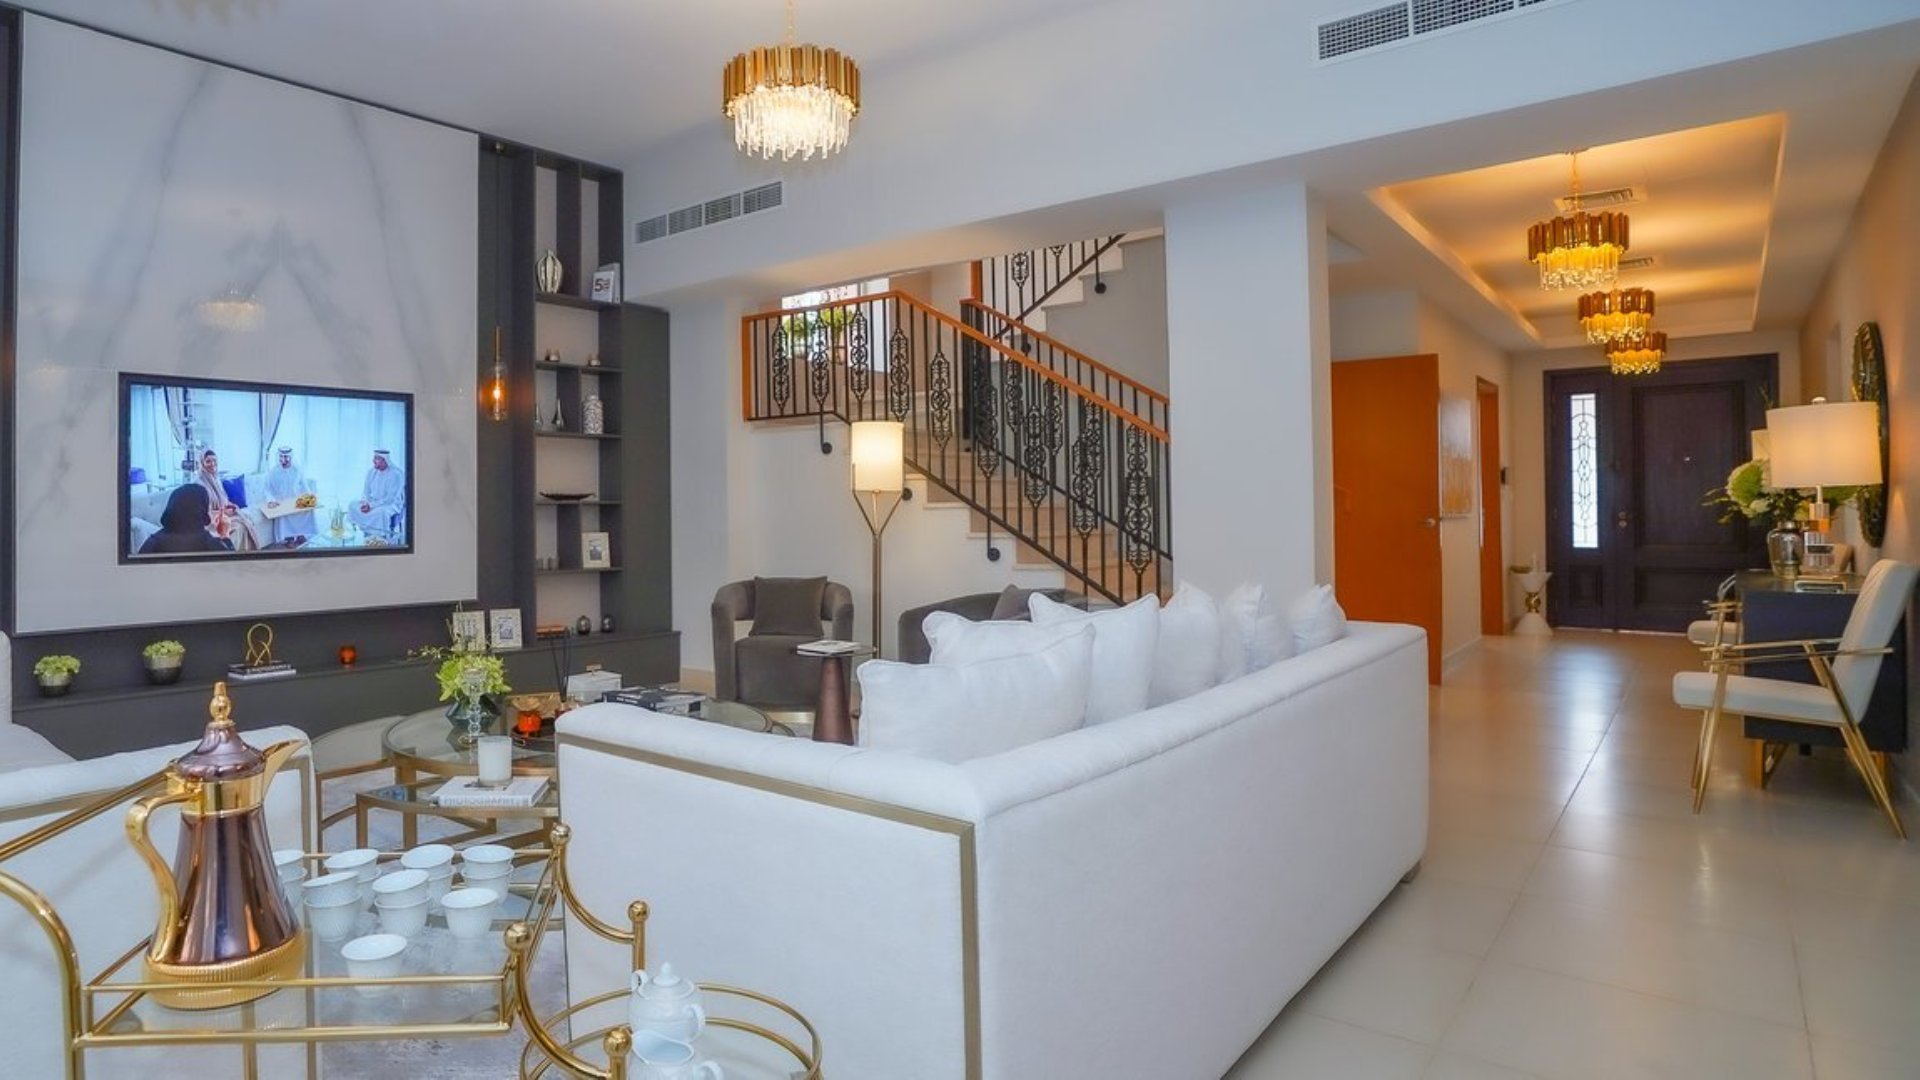 Villa for sale in Nadd Al Sheba, Dubai, UAE, 4 bedrooms, 354 m², No. 24913 – photo 2